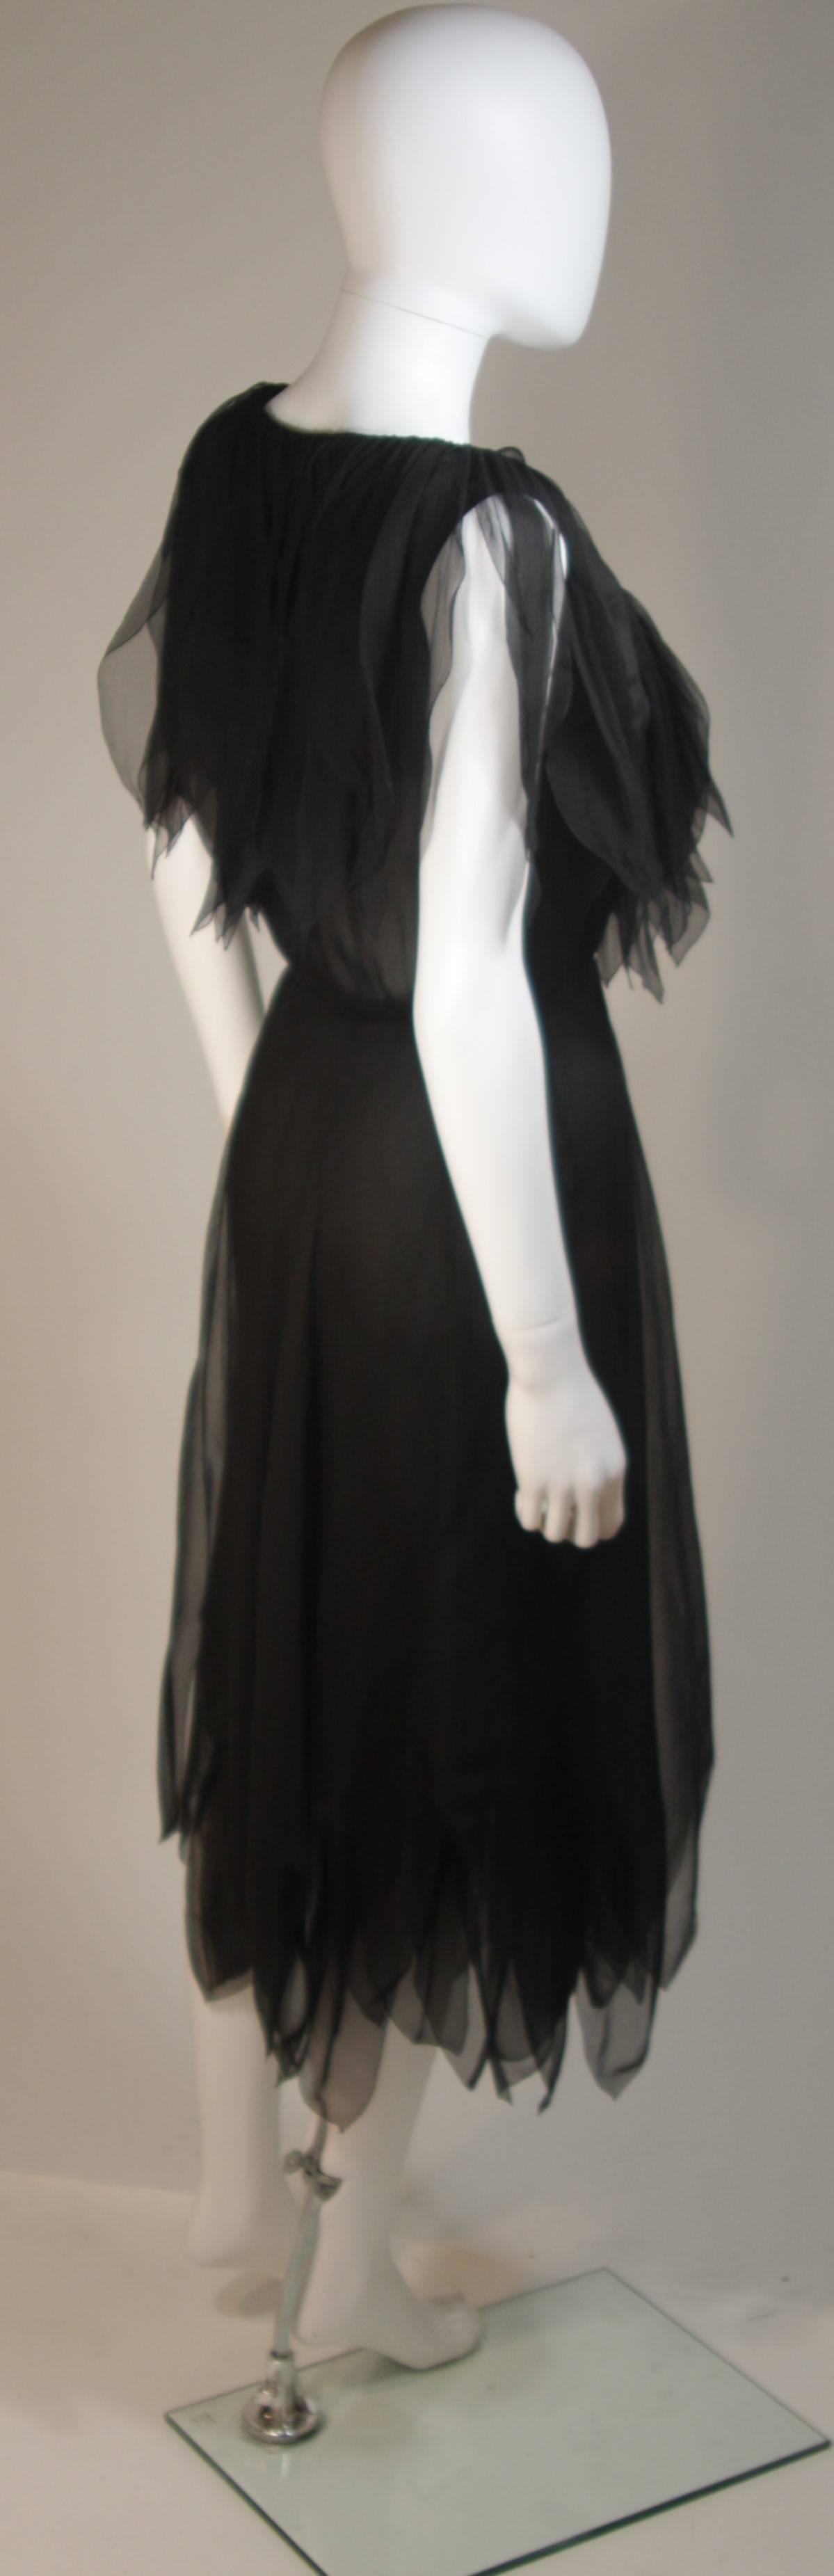 CHRISTIAN DIOR COUTURE Layered Black Silk Chiffon Cocktail Dress Size 4-6 3